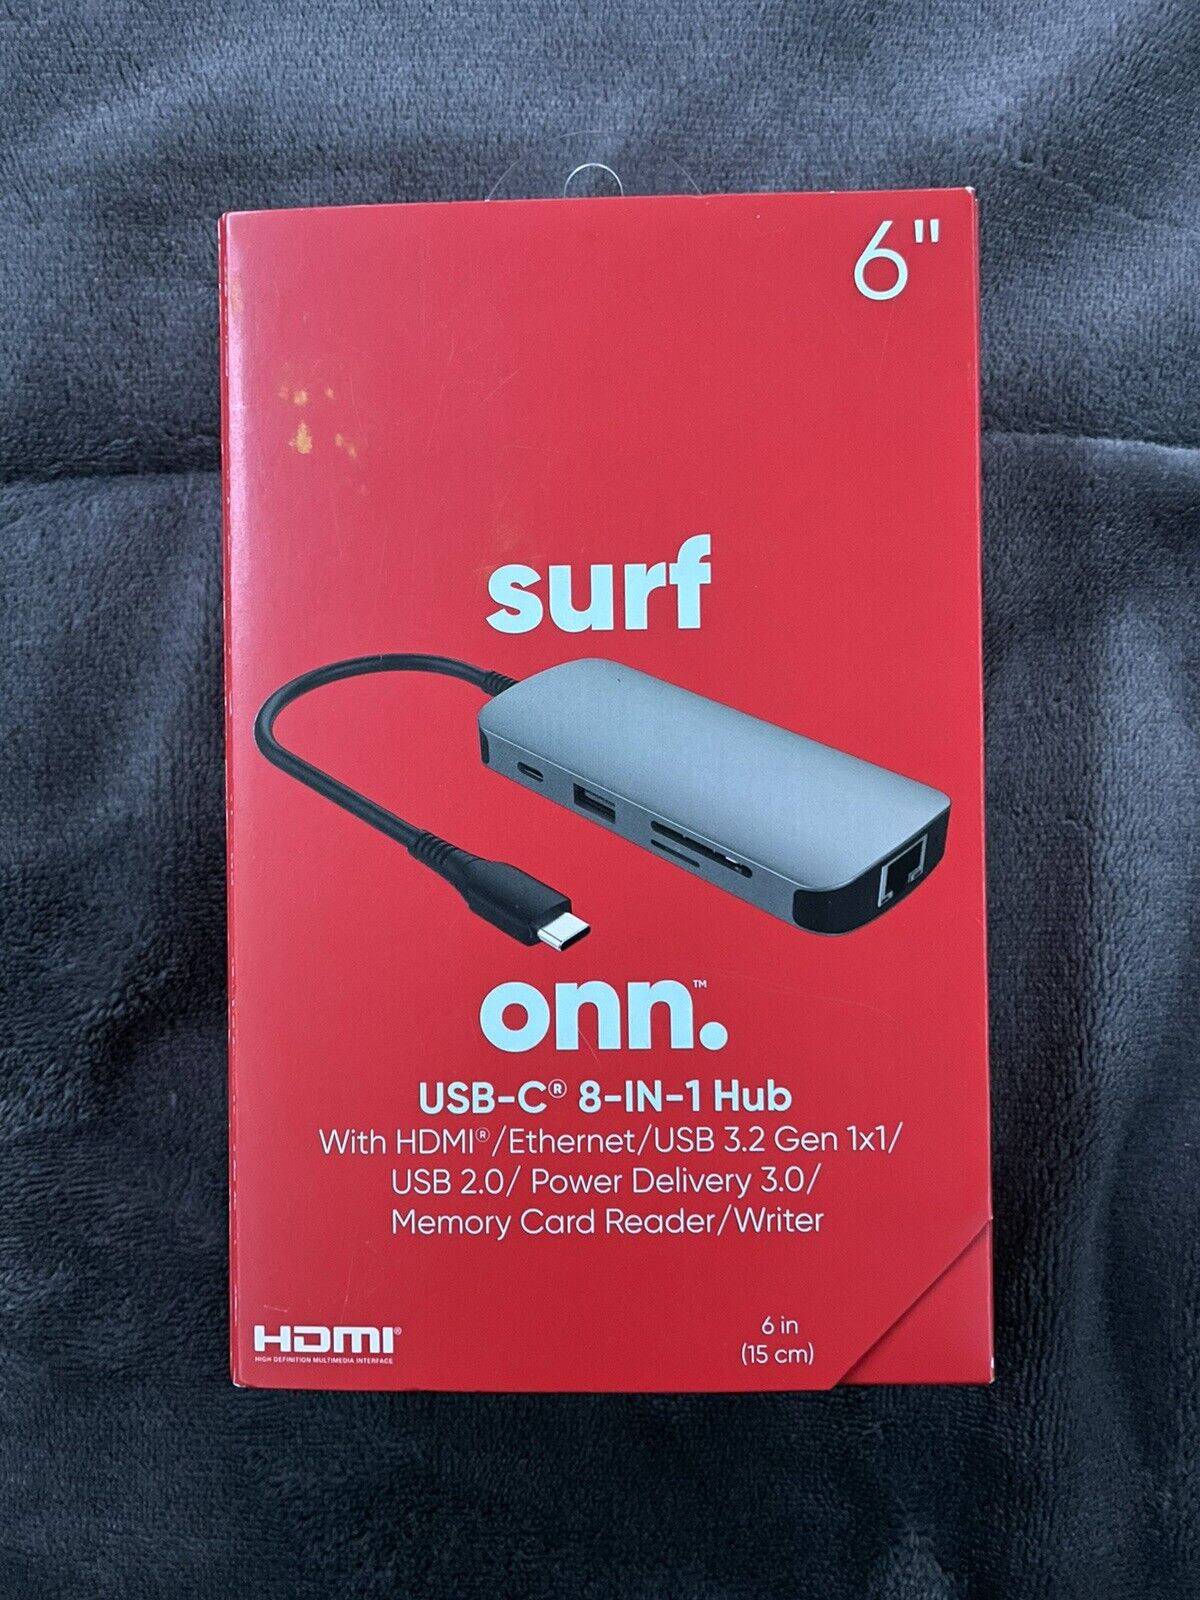 Surf Onn 6”  USB-C  8-IN-1 Hub Memory Card Reader Writer